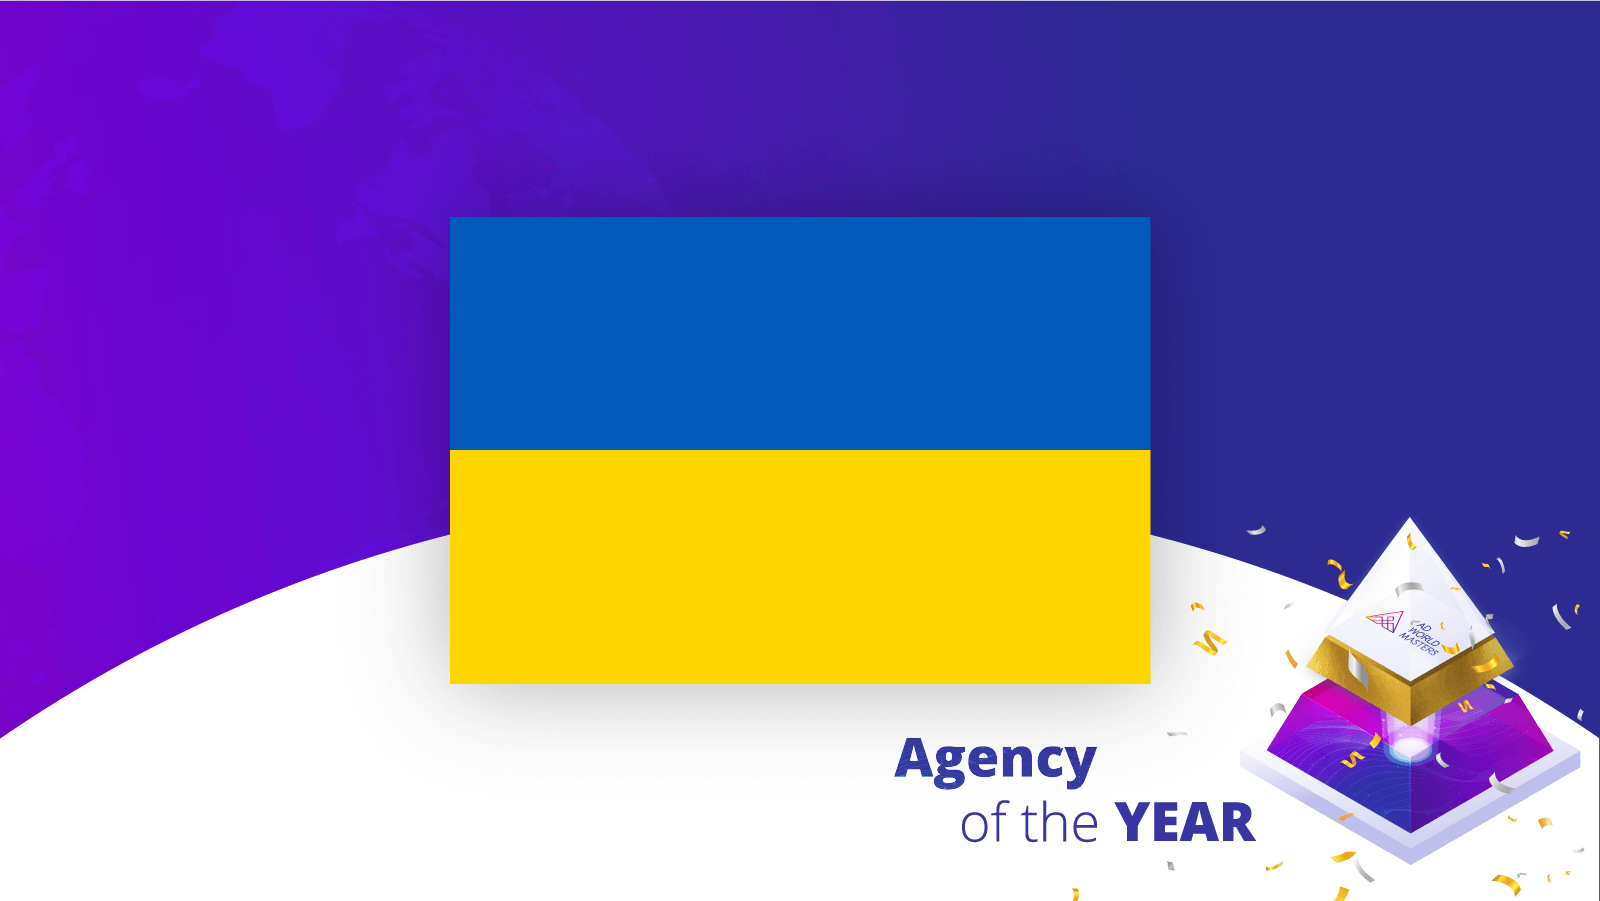 Agencies of the Year Ukraine